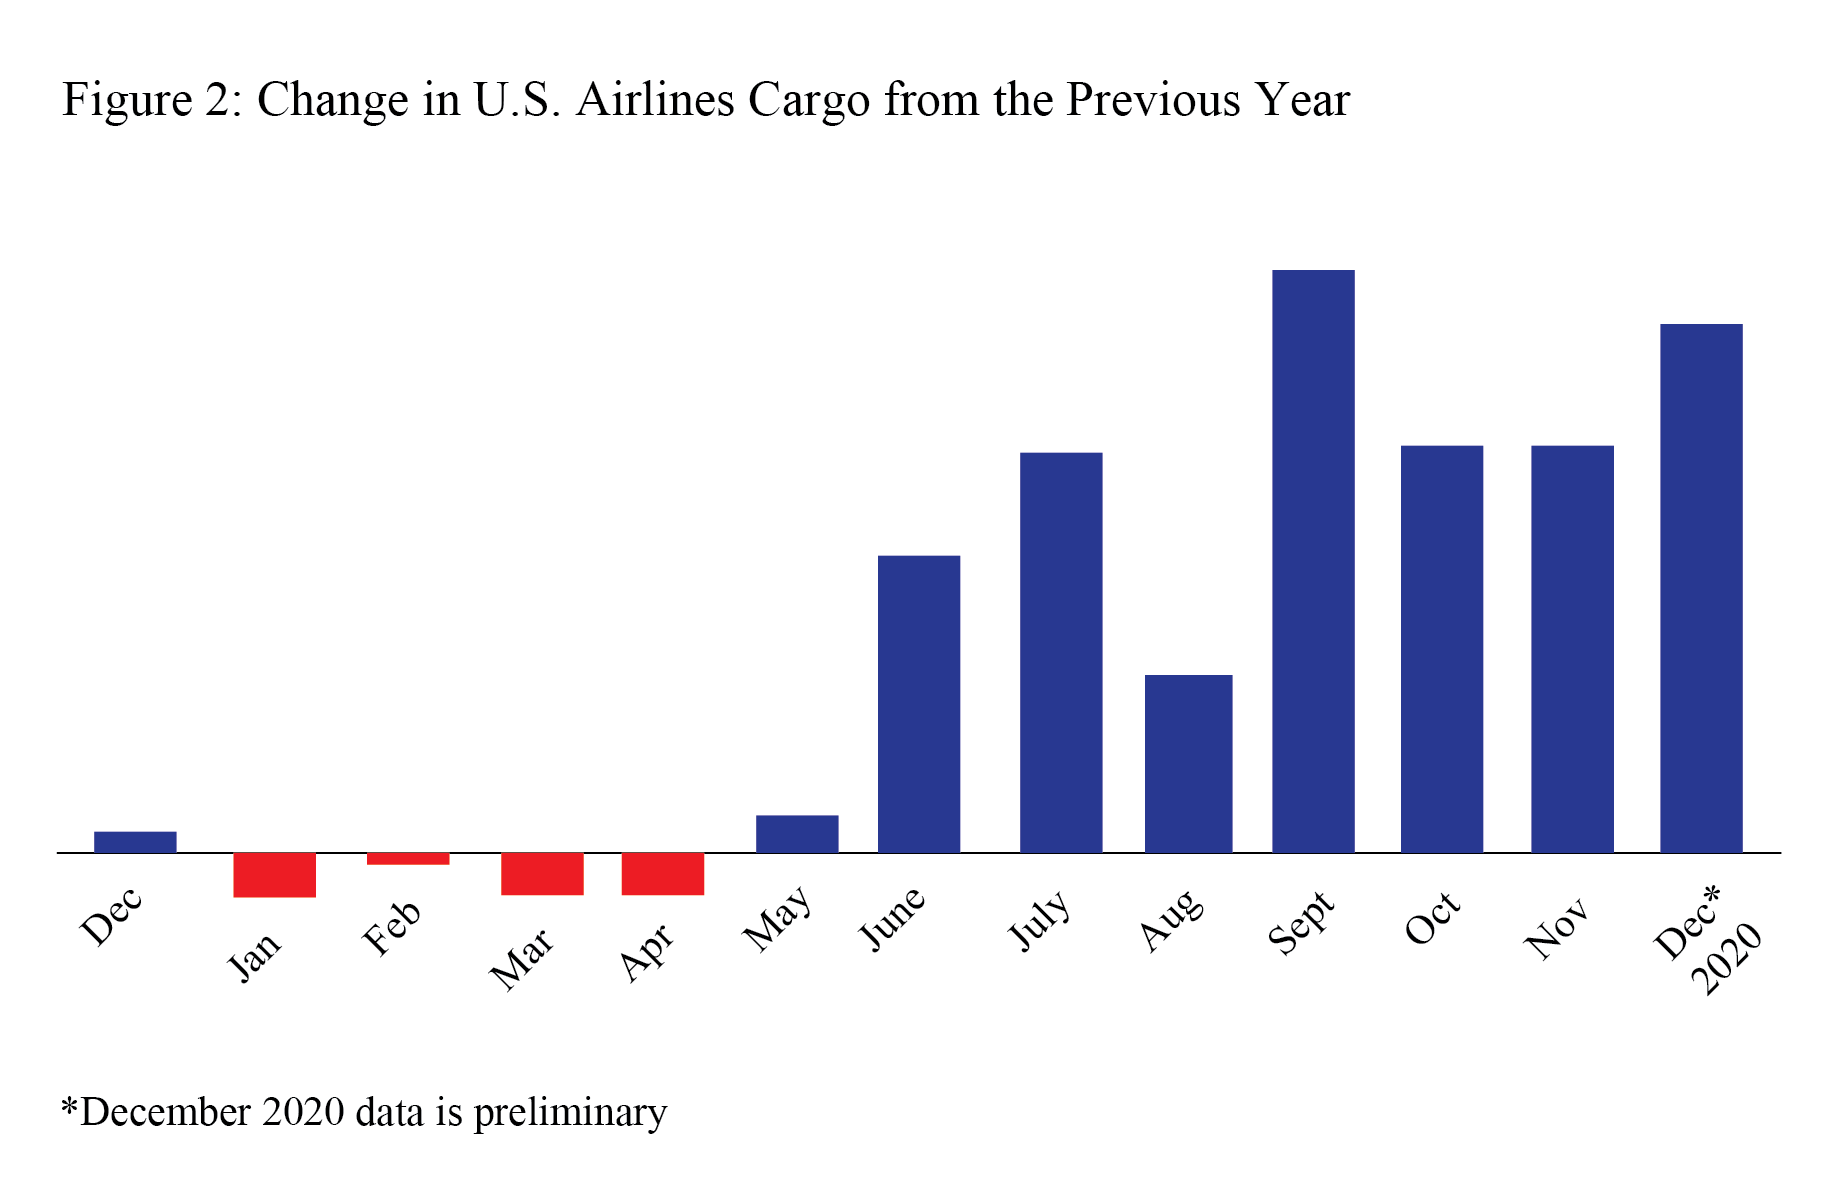 U.S. Airline Cargo Data (Preliminary), December 2020